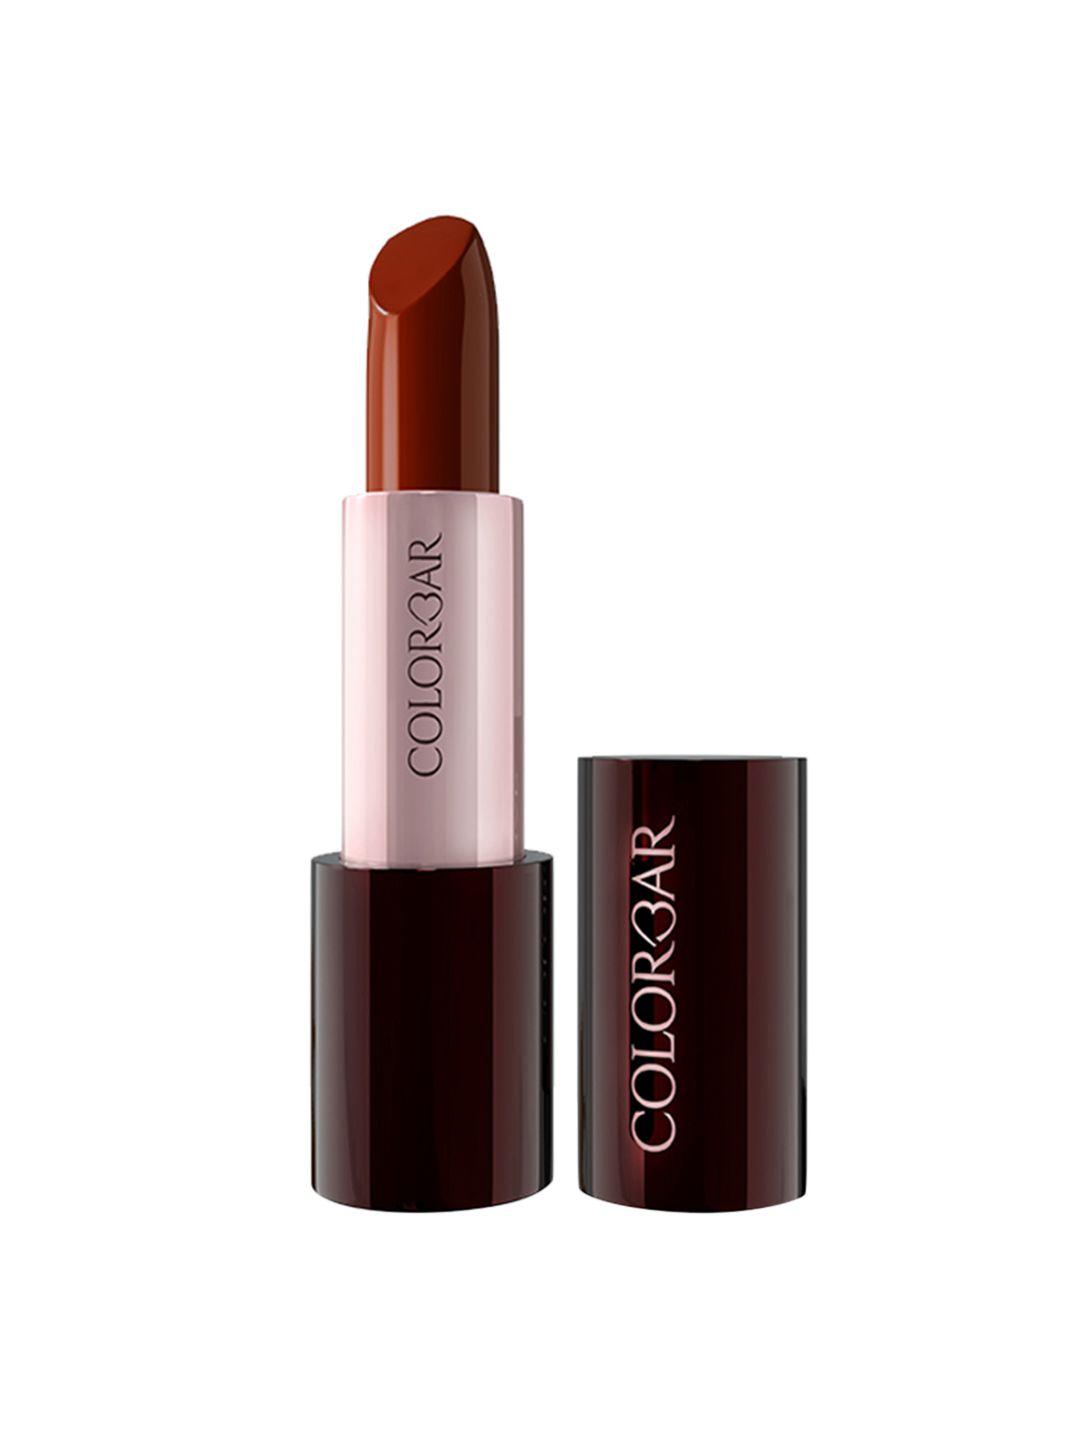 colorbar take me as i am vegan creme refillable lipstick with vitamin e - sexy nude 008